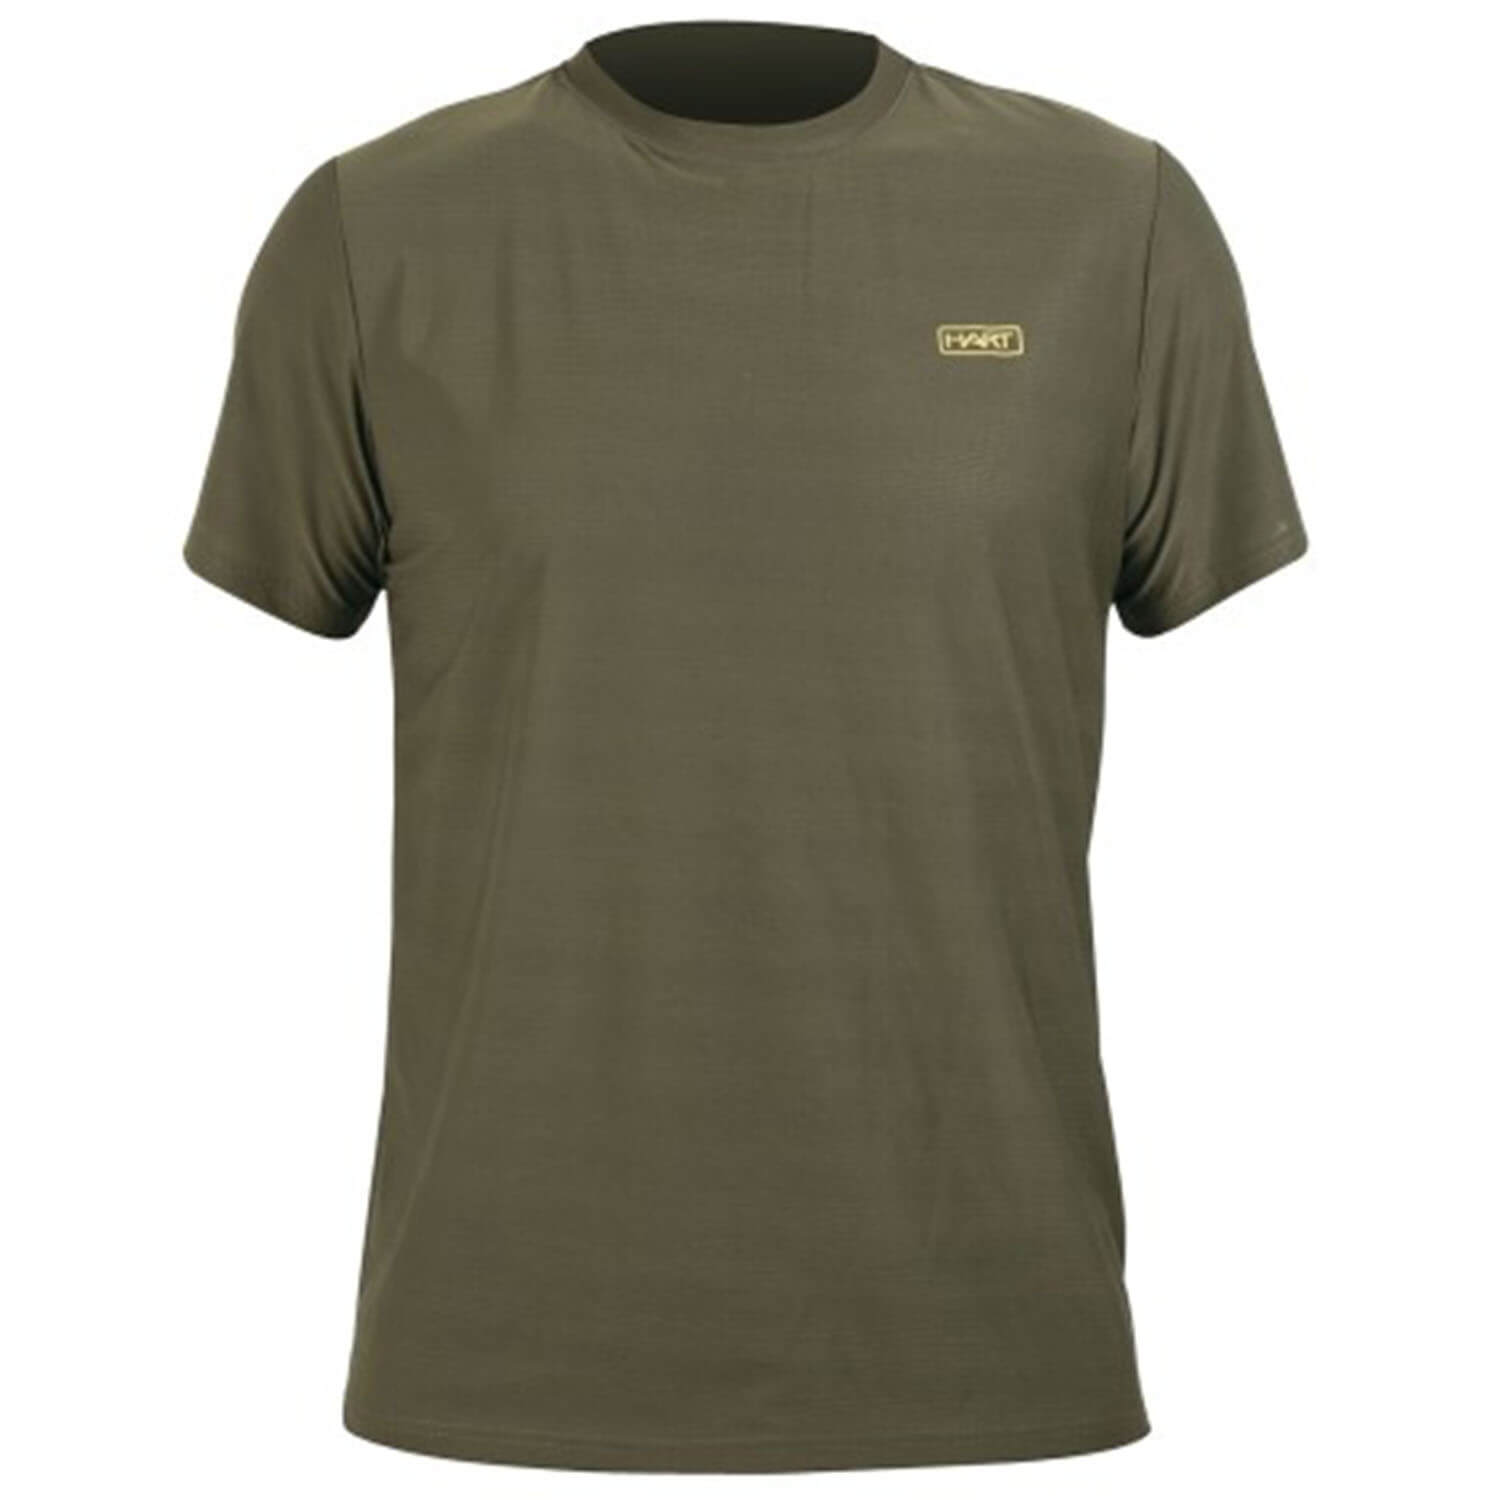  Hart Ural-TS T-shirt (groen) - Jachtshirts